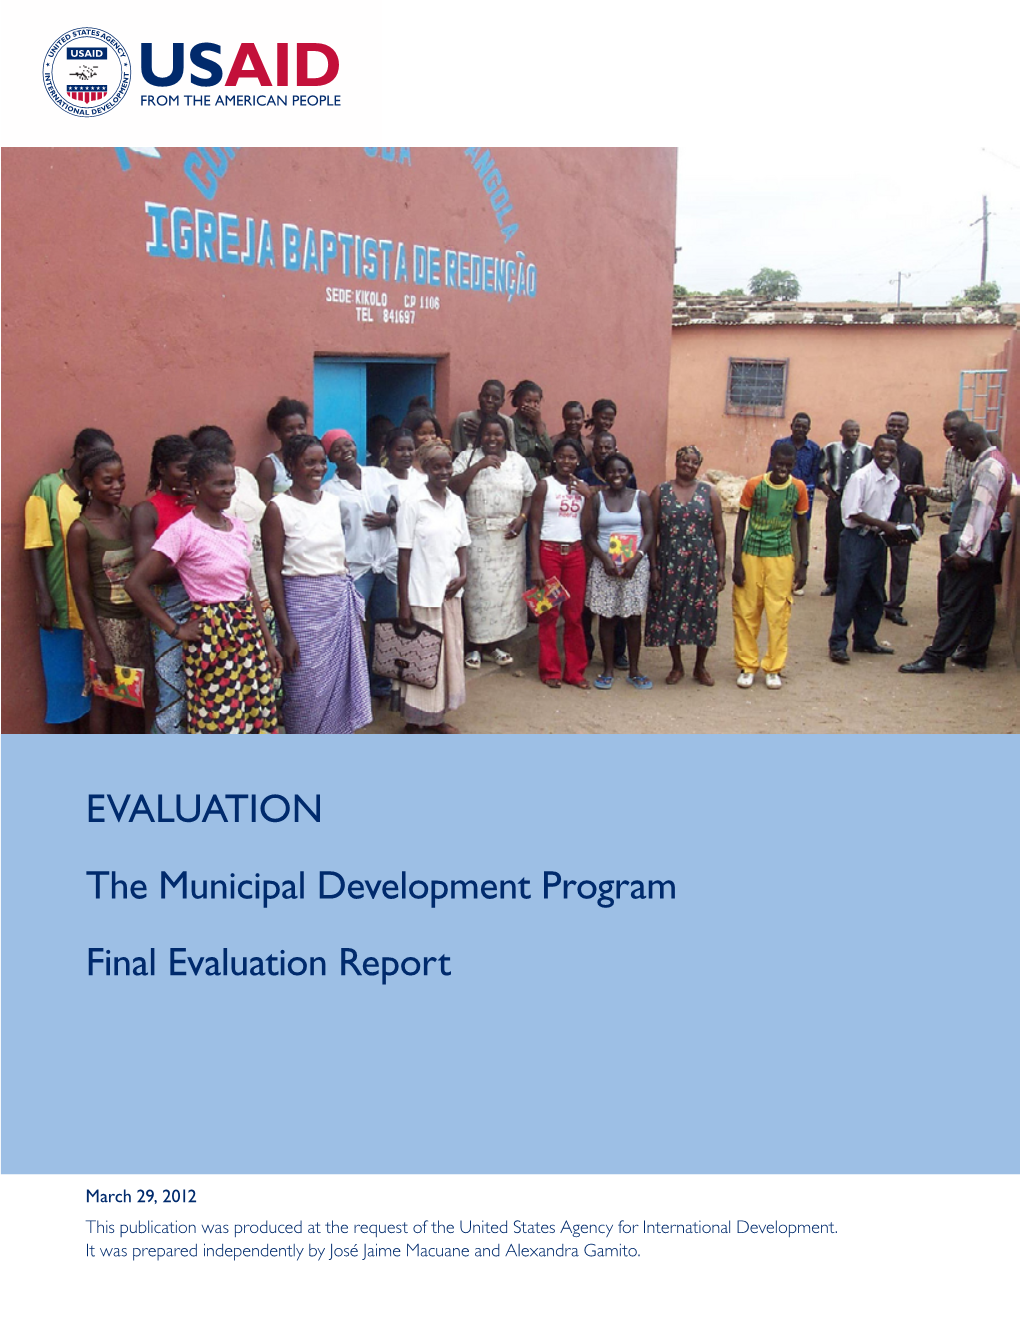 EVALUATION the Municipal Development Program Final Evaluation Report